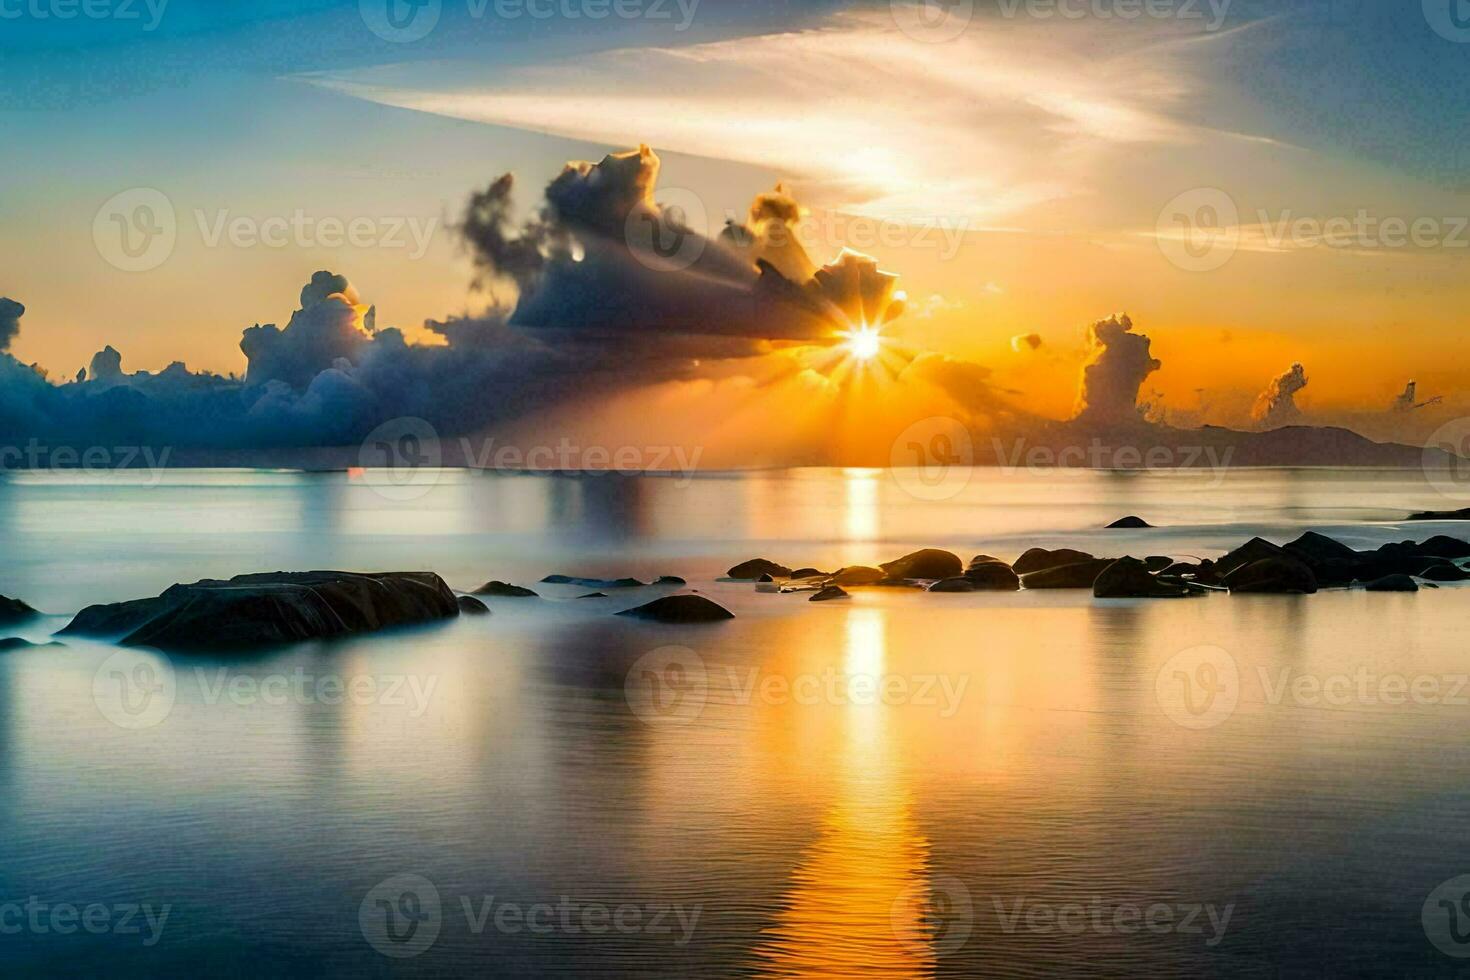 a Sol sobe sobre a oceano dentro isto lindo foto. gerado por IA foto